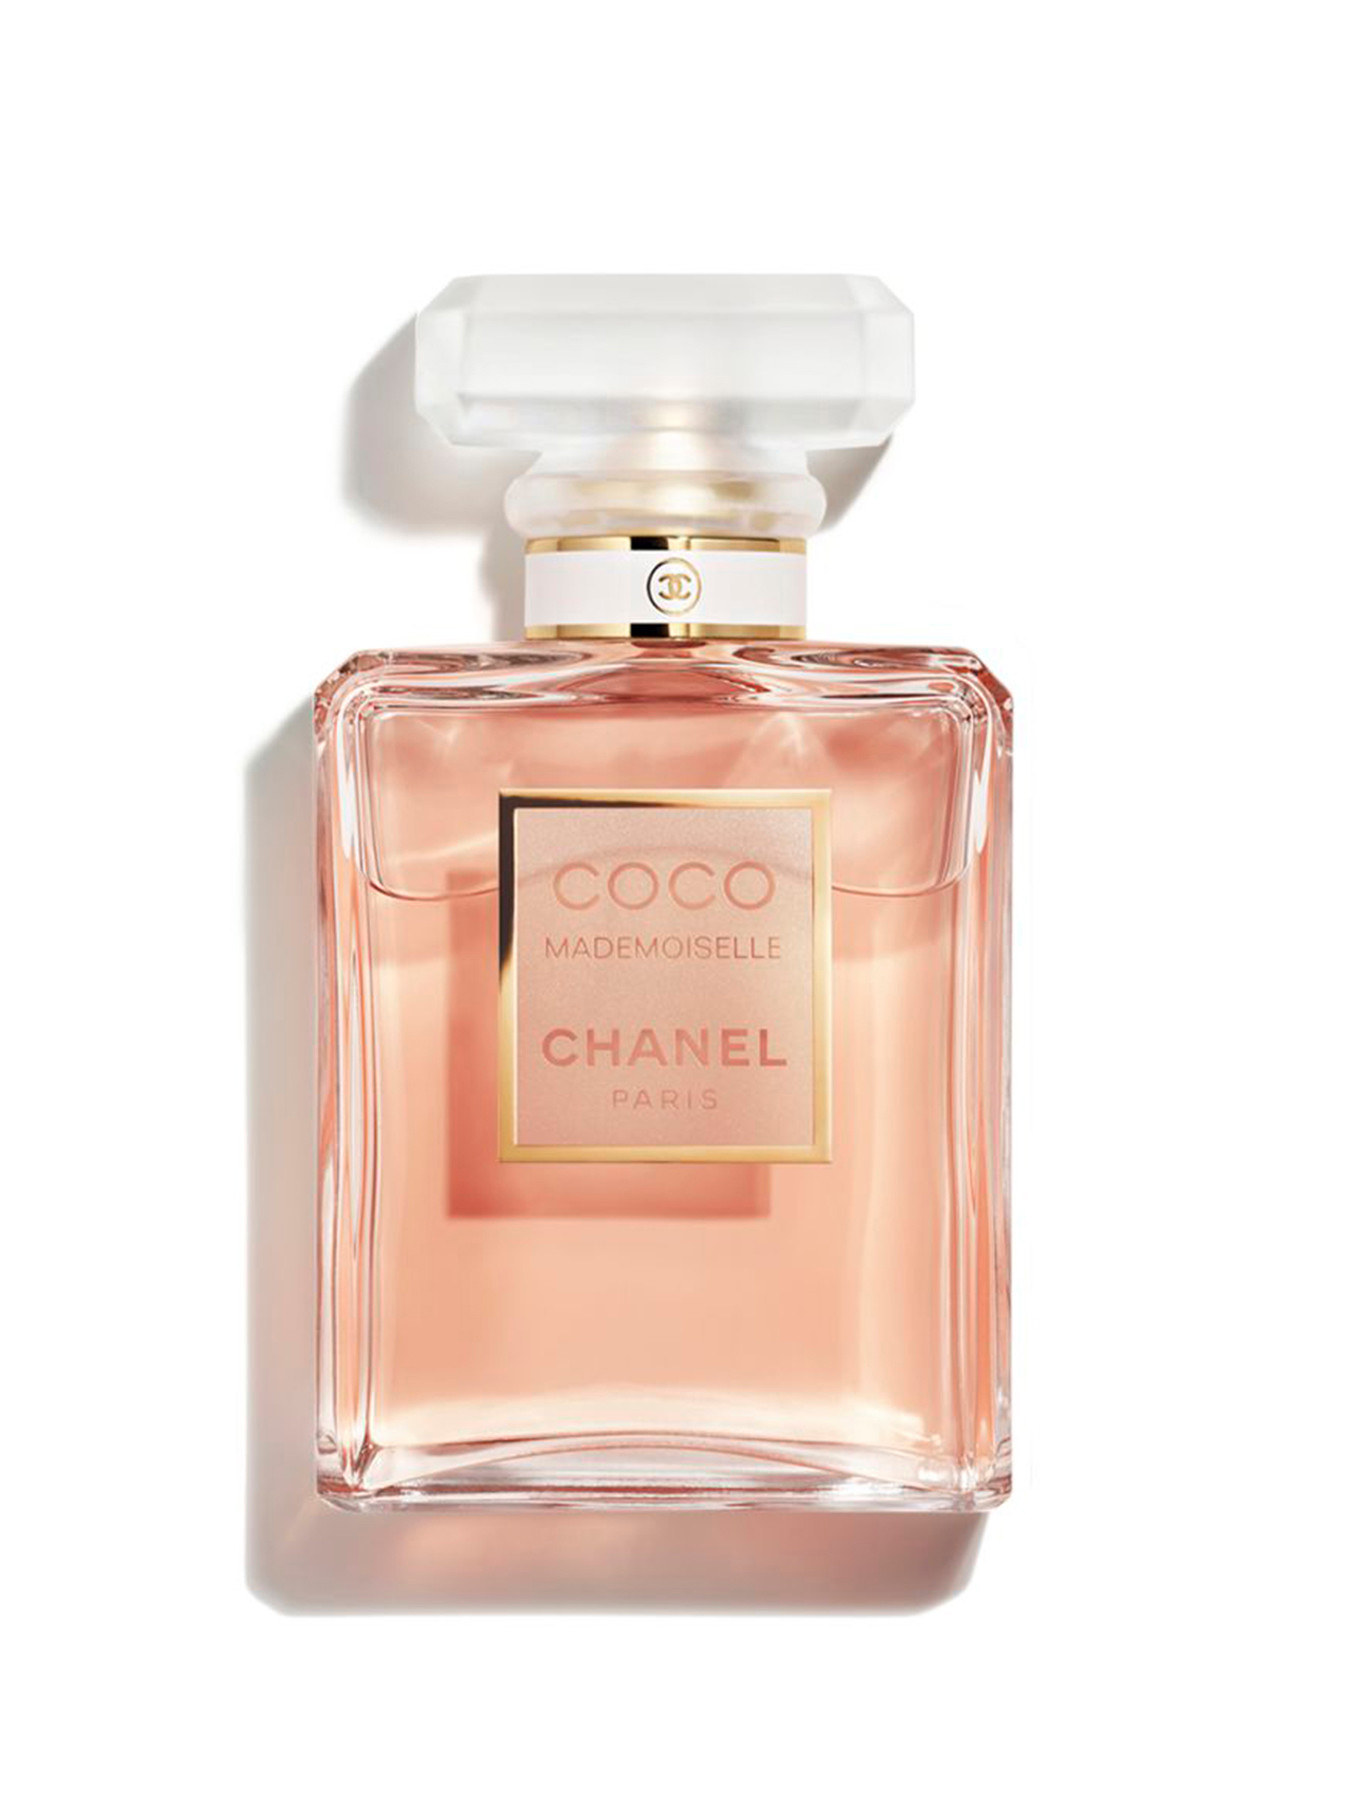 CHANEL COCO MADEMOISELLE Eau De Parfum Spray 35ml | Women's Fragrances ...